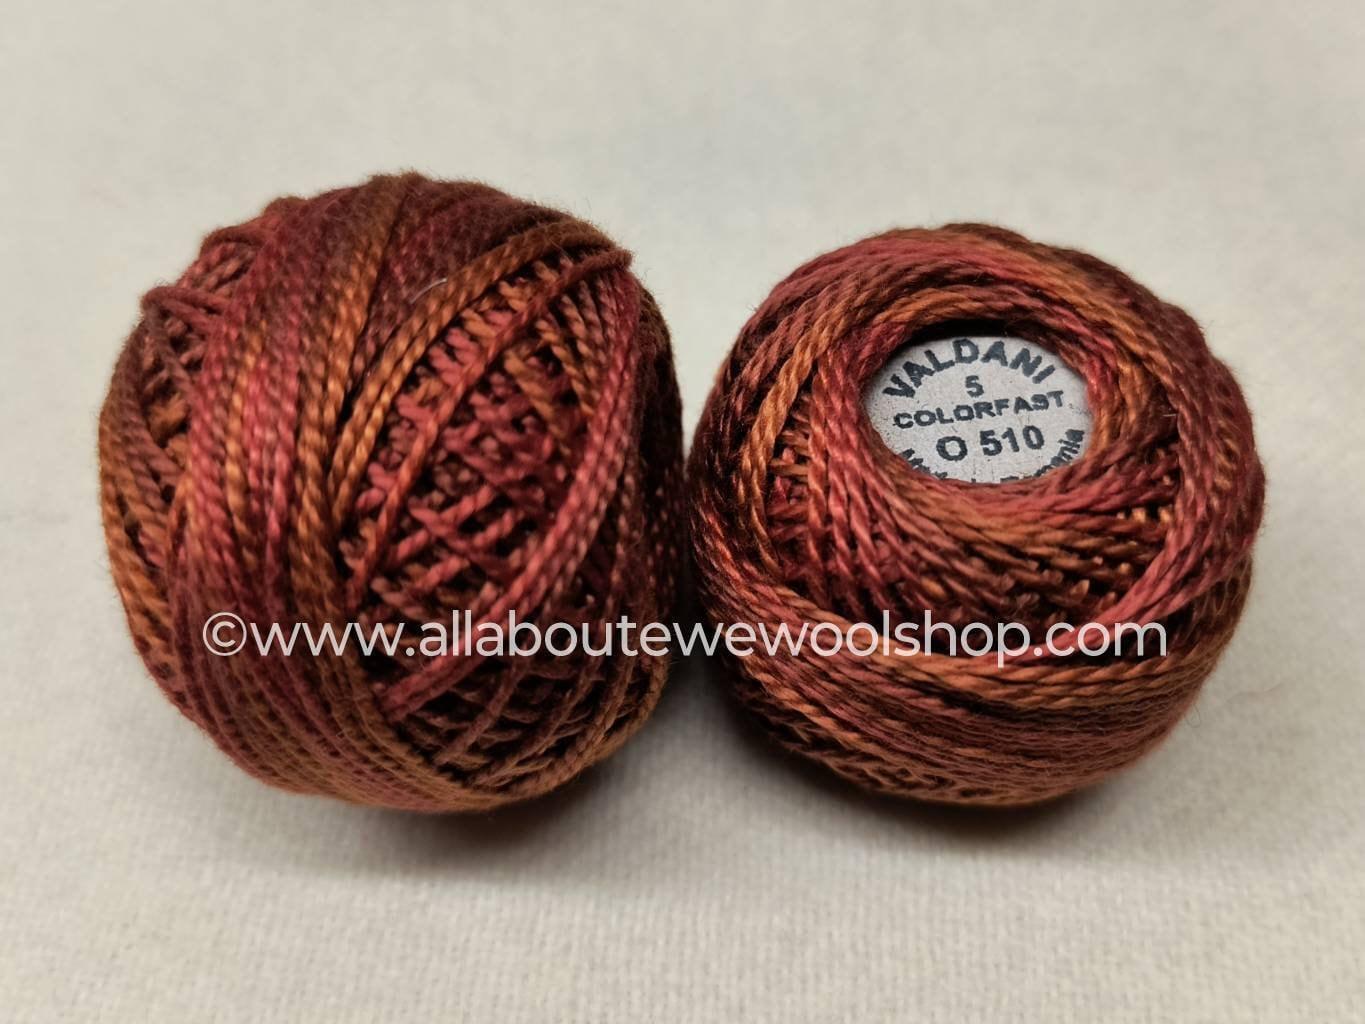 O510 #5 Valdani Pearl/Perle Cotton Thread - All About Ewe Wool Shop